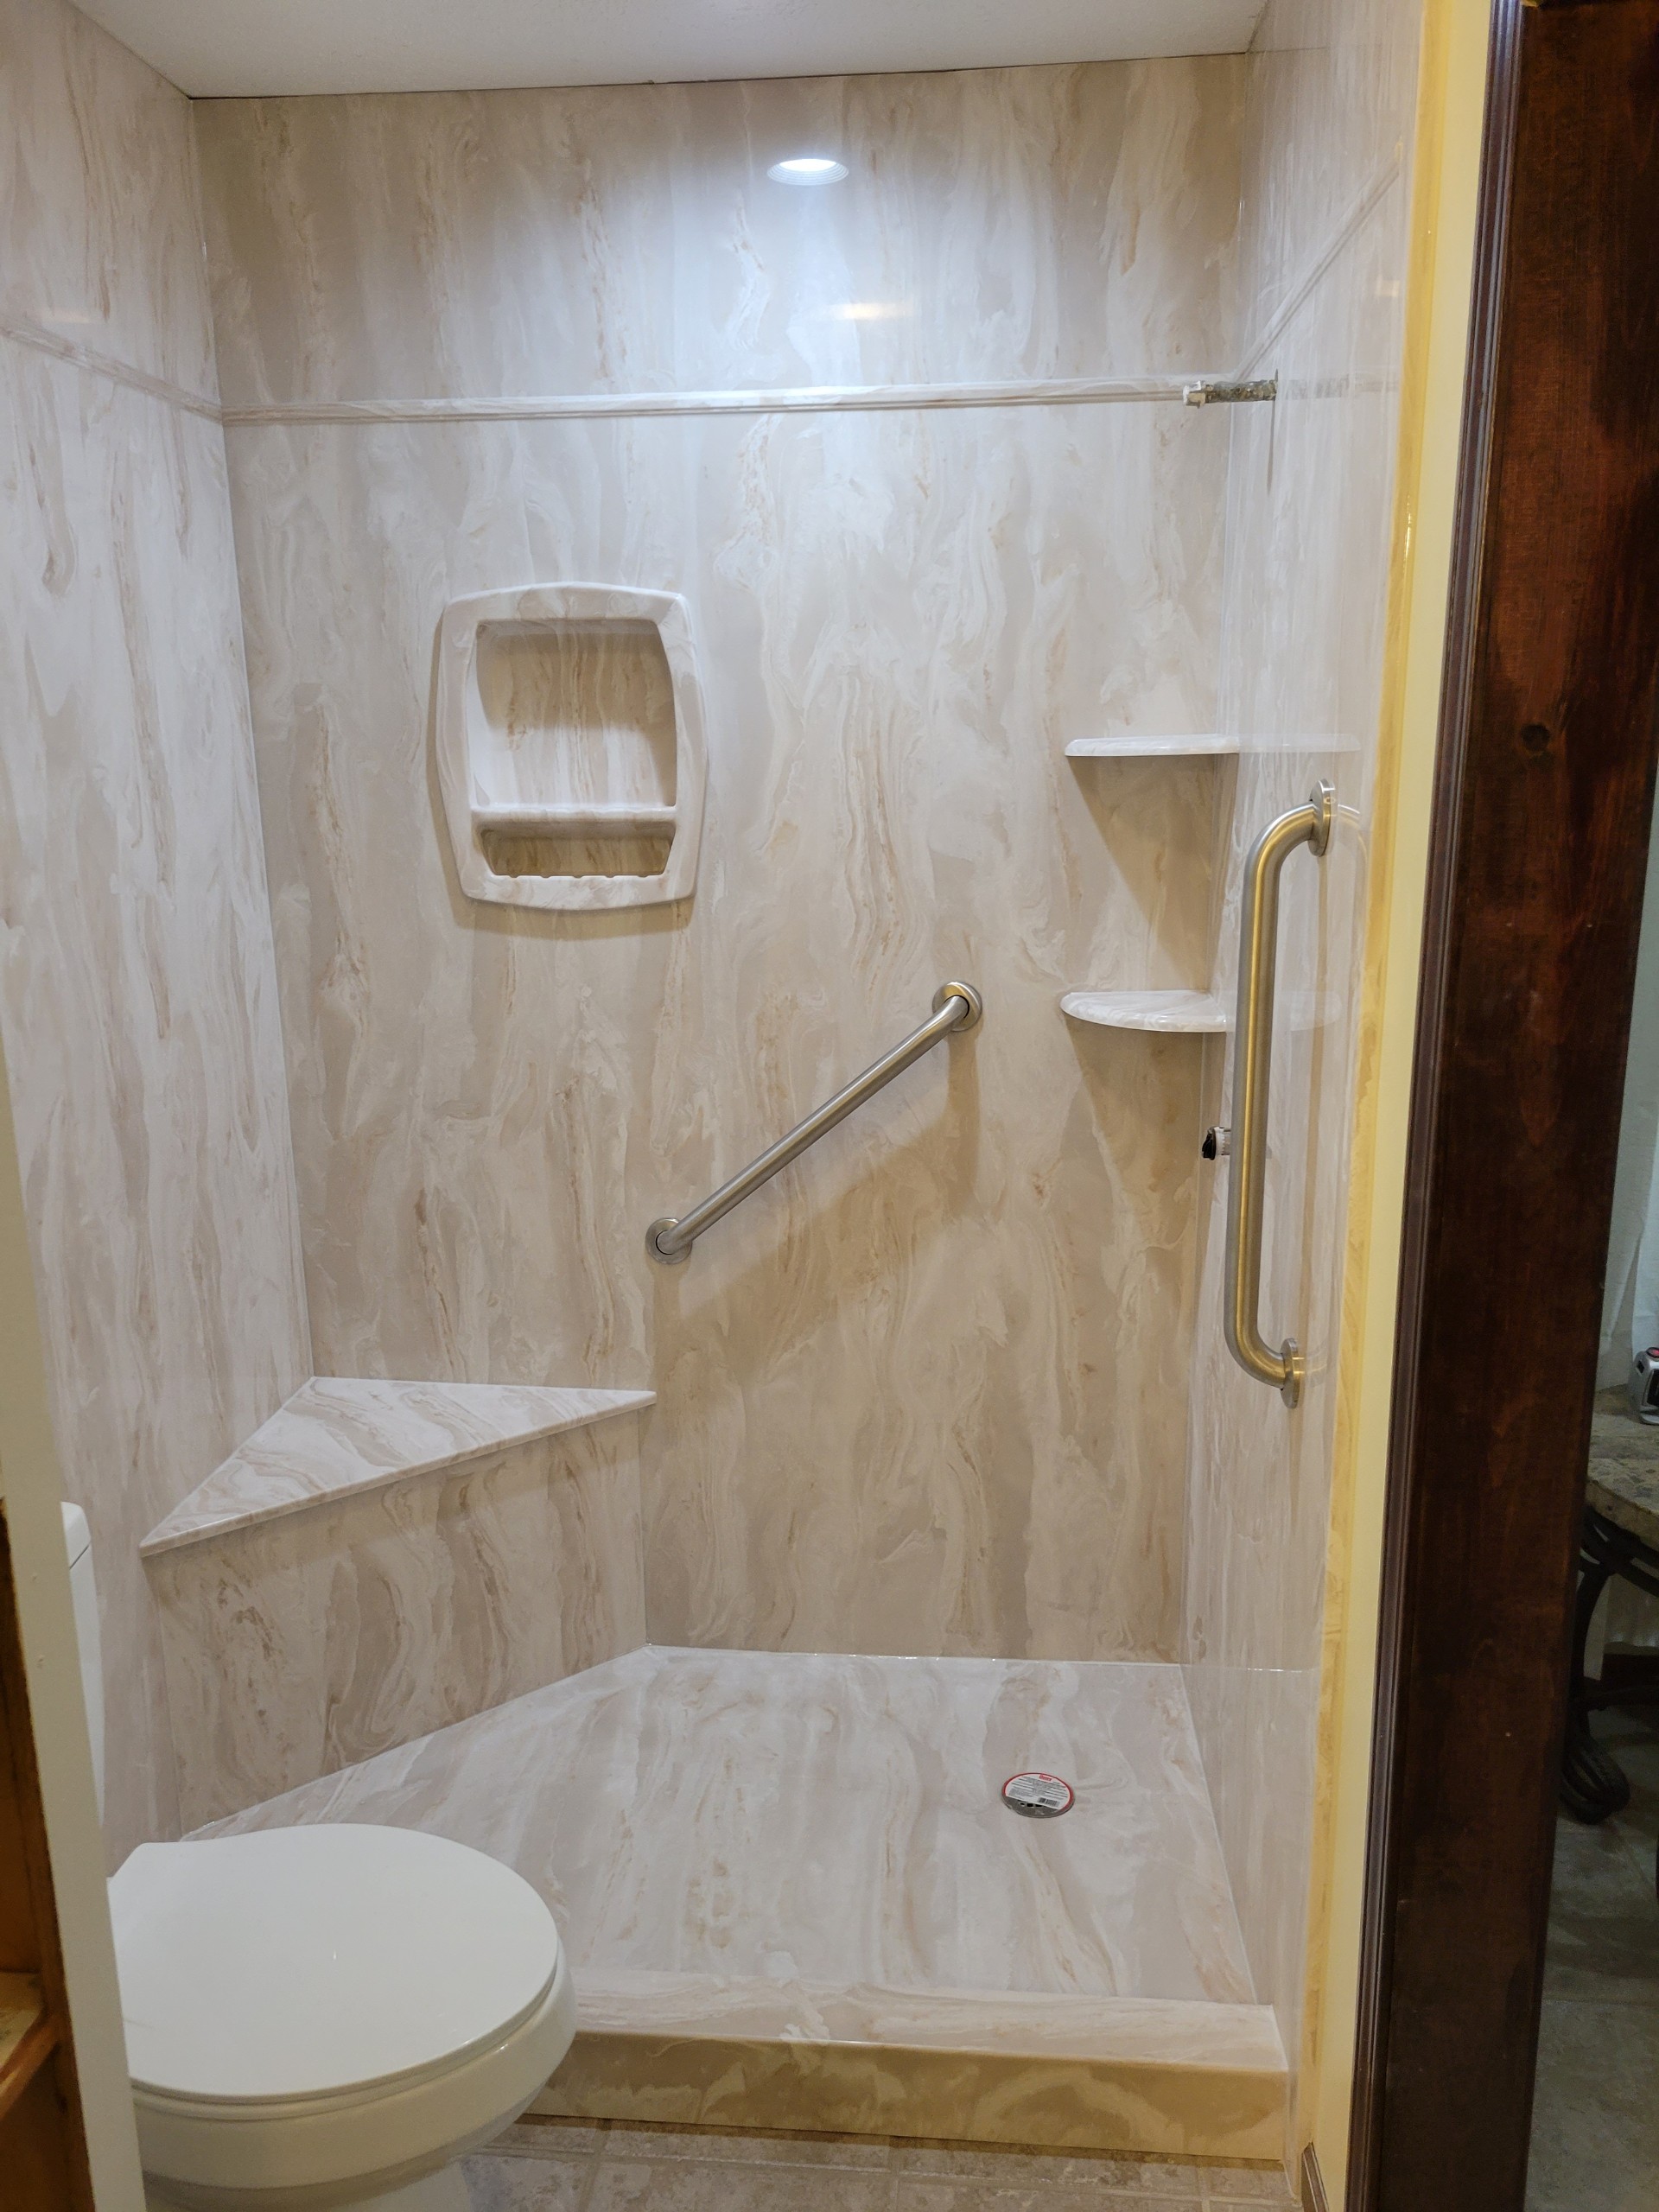 cuktured marble shower bathtub conversion